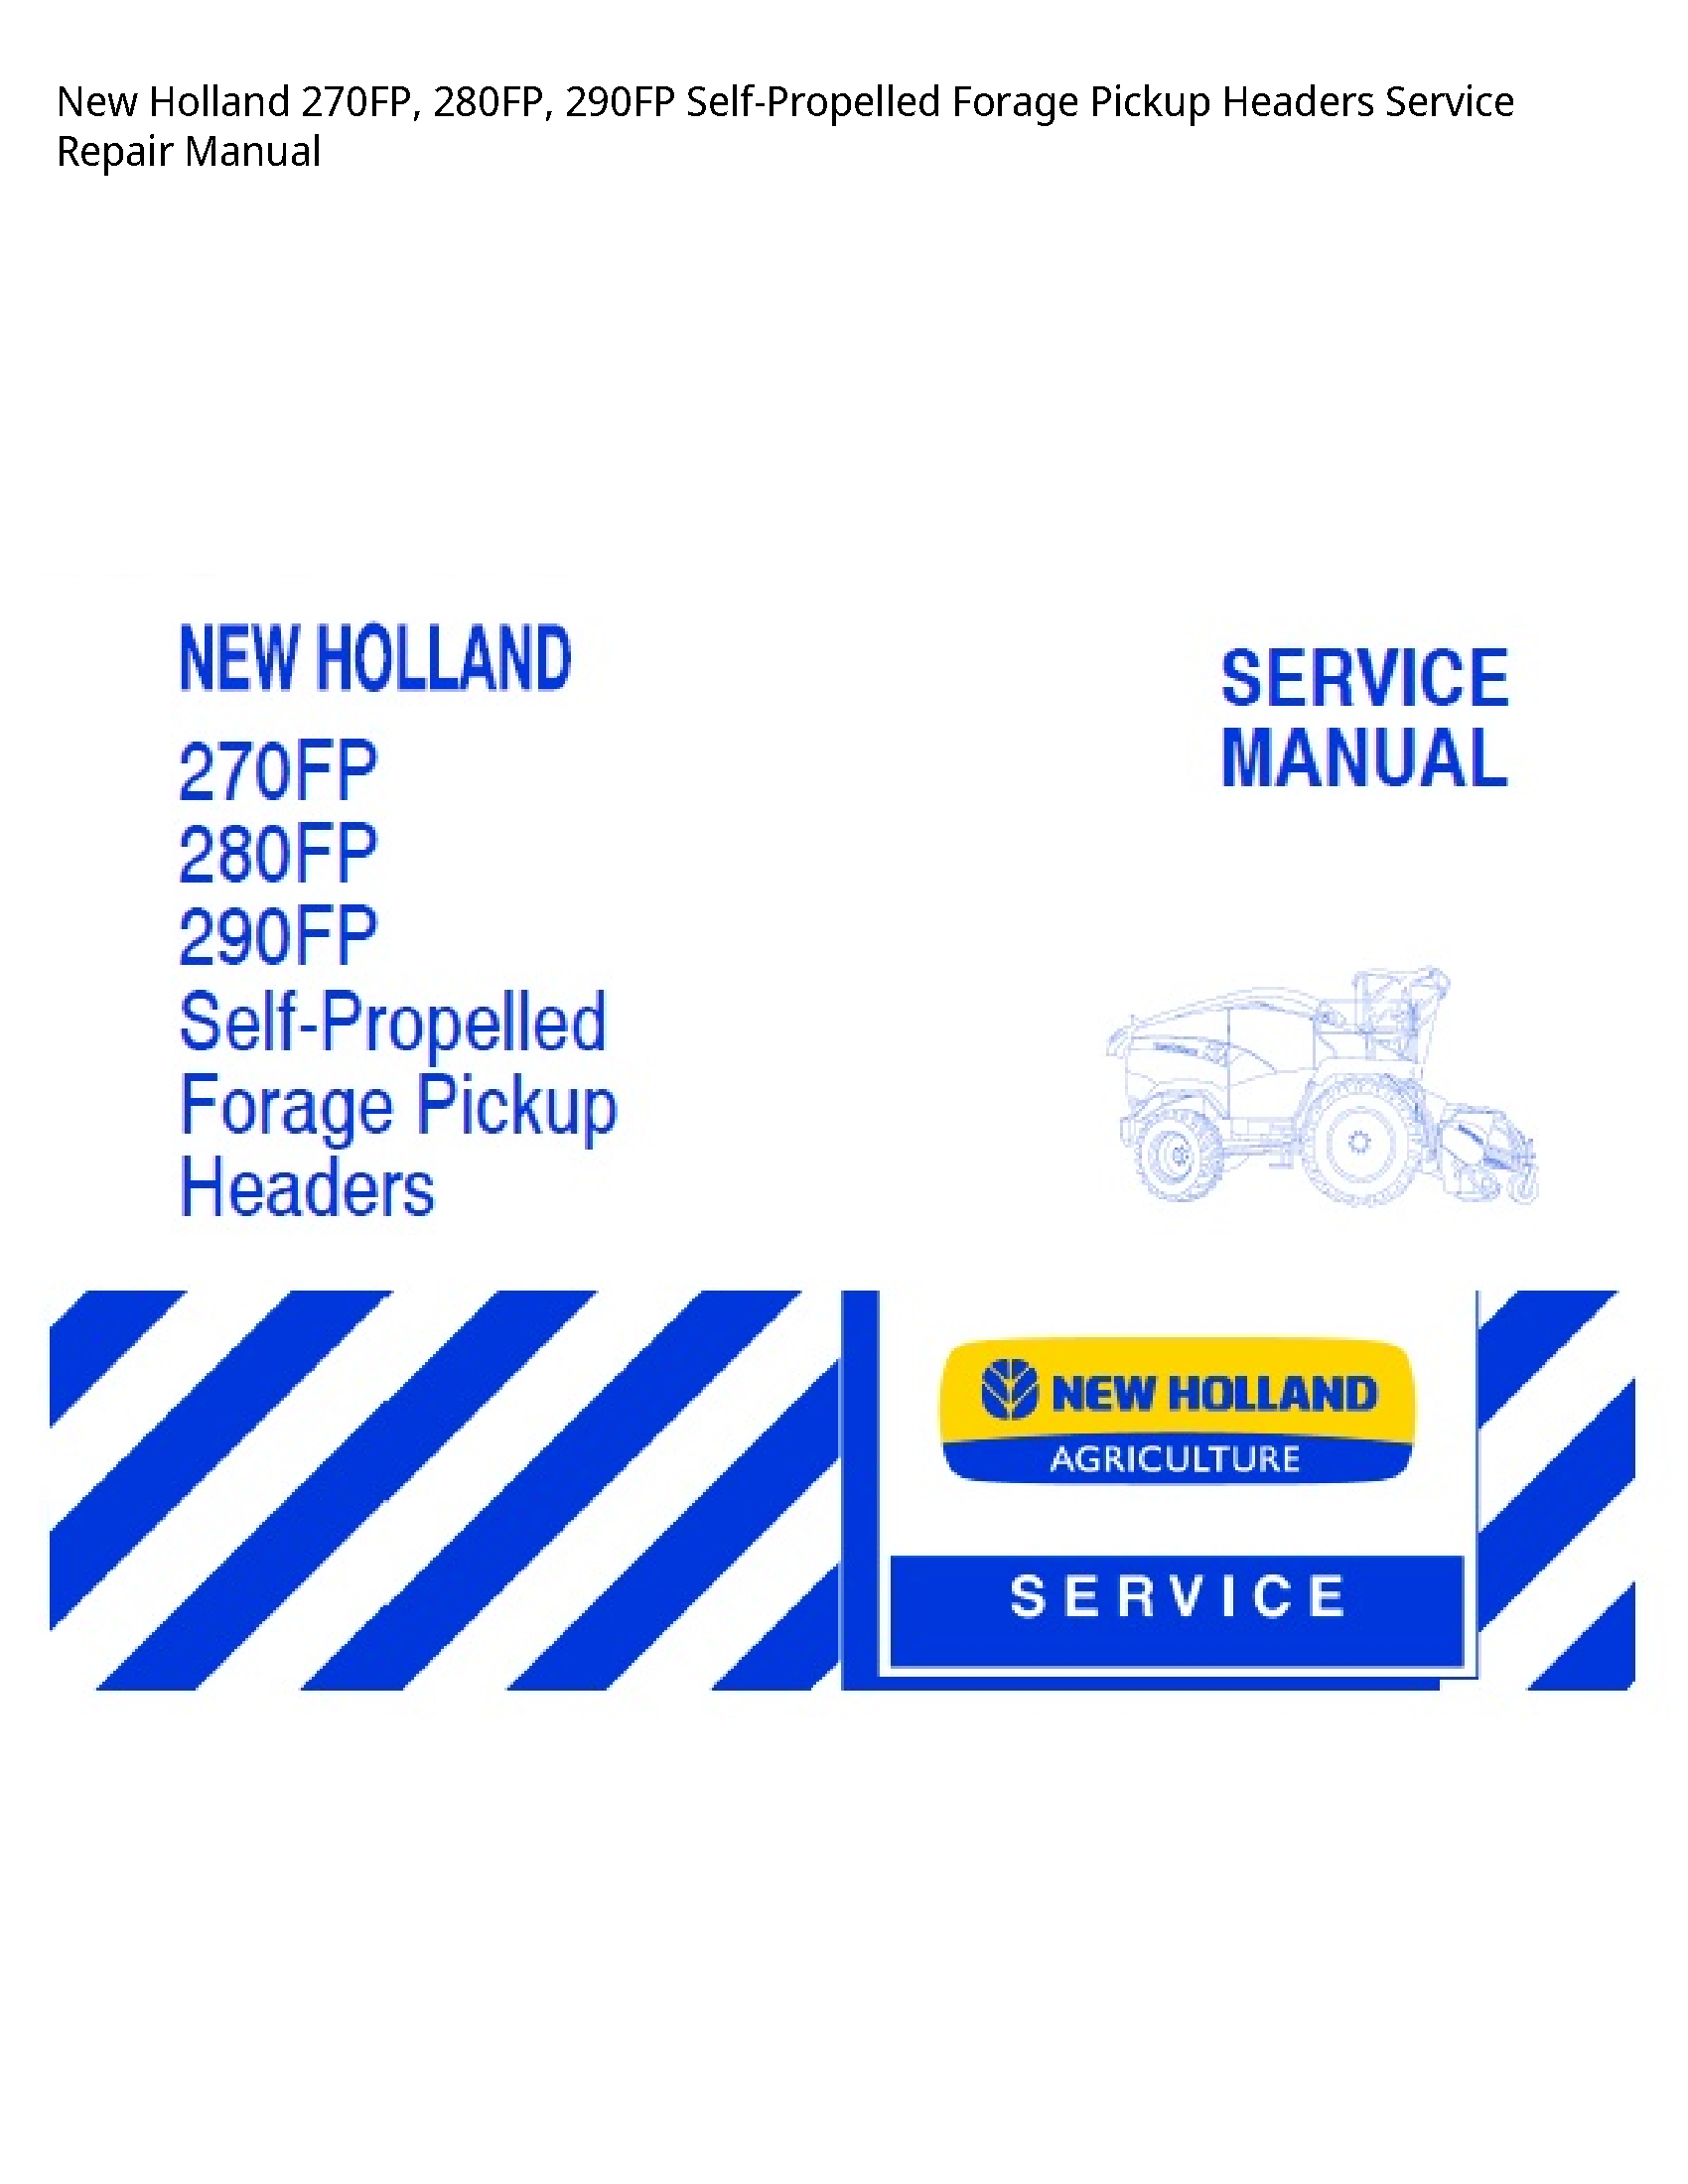 New Holland 270FP Self-Propelled Forage Pickup Headers manual